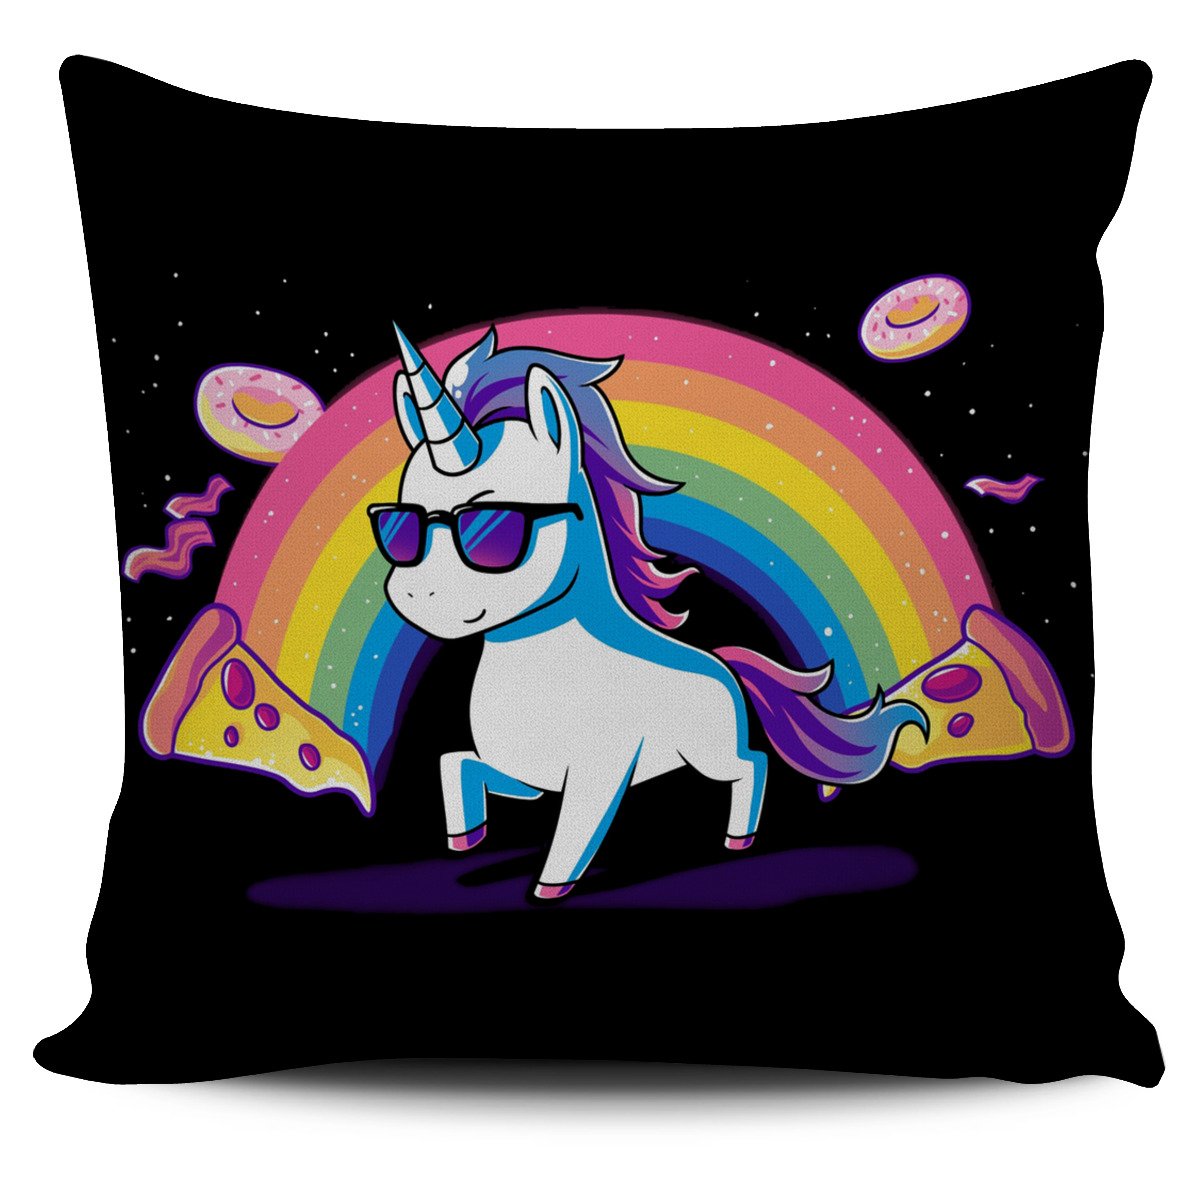 Unicorn Pillow Cover 1